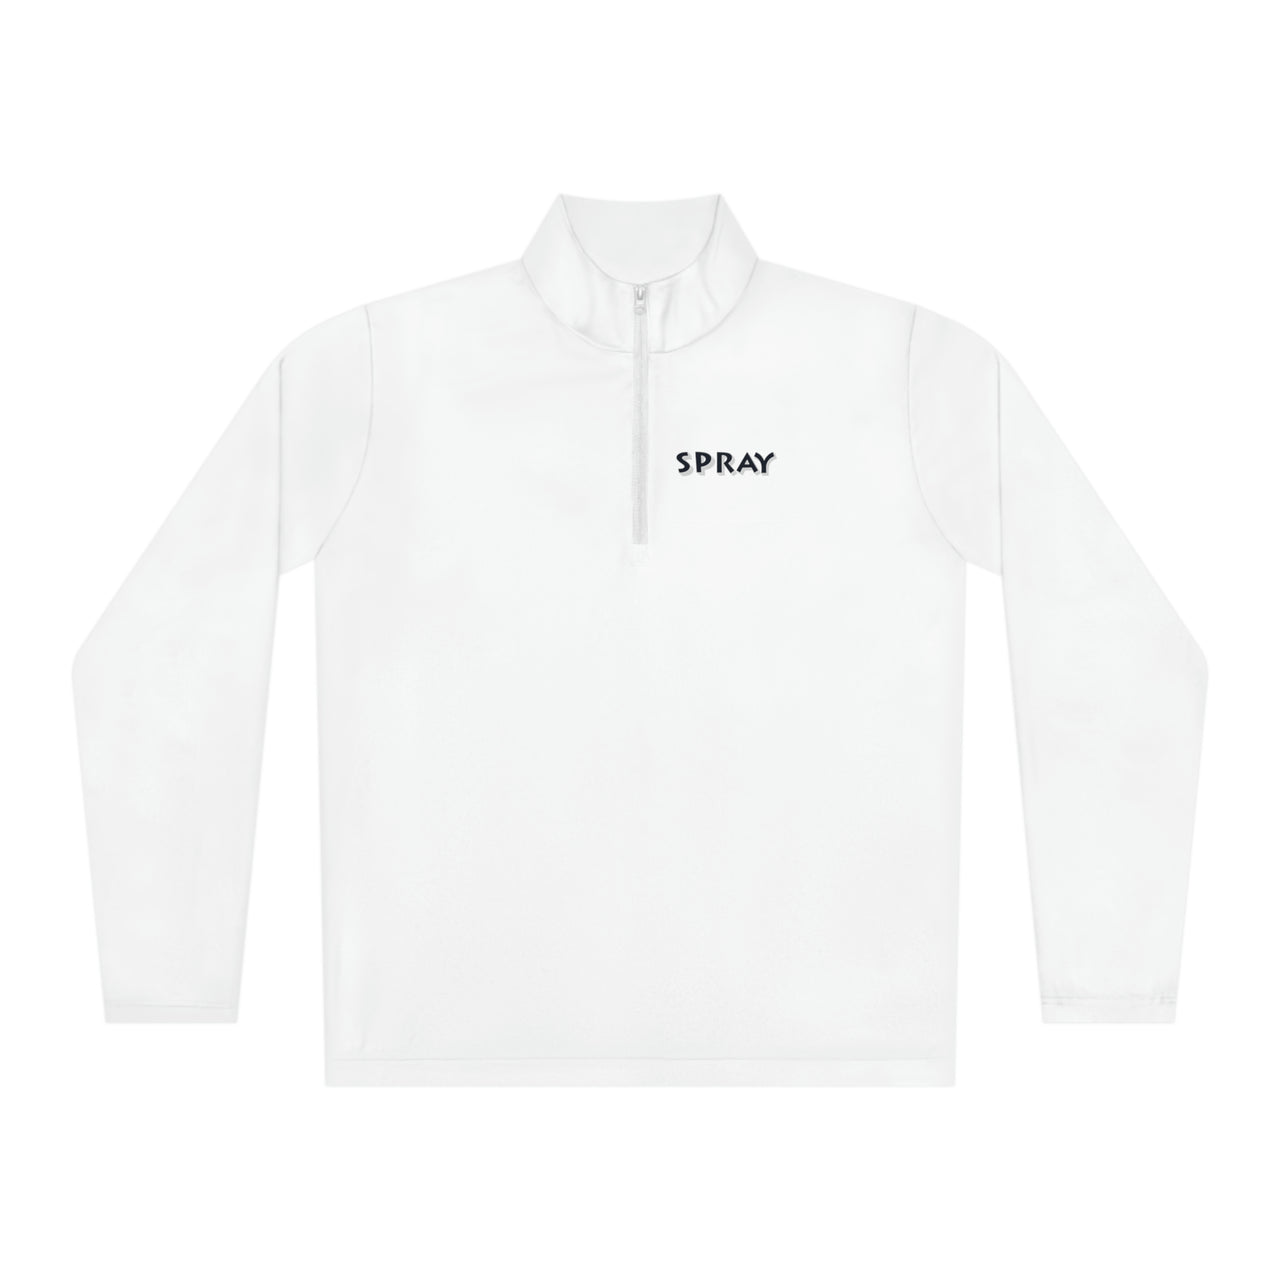 SPRAY- Unisex Quarter-Zip Pullover (White & Navy)